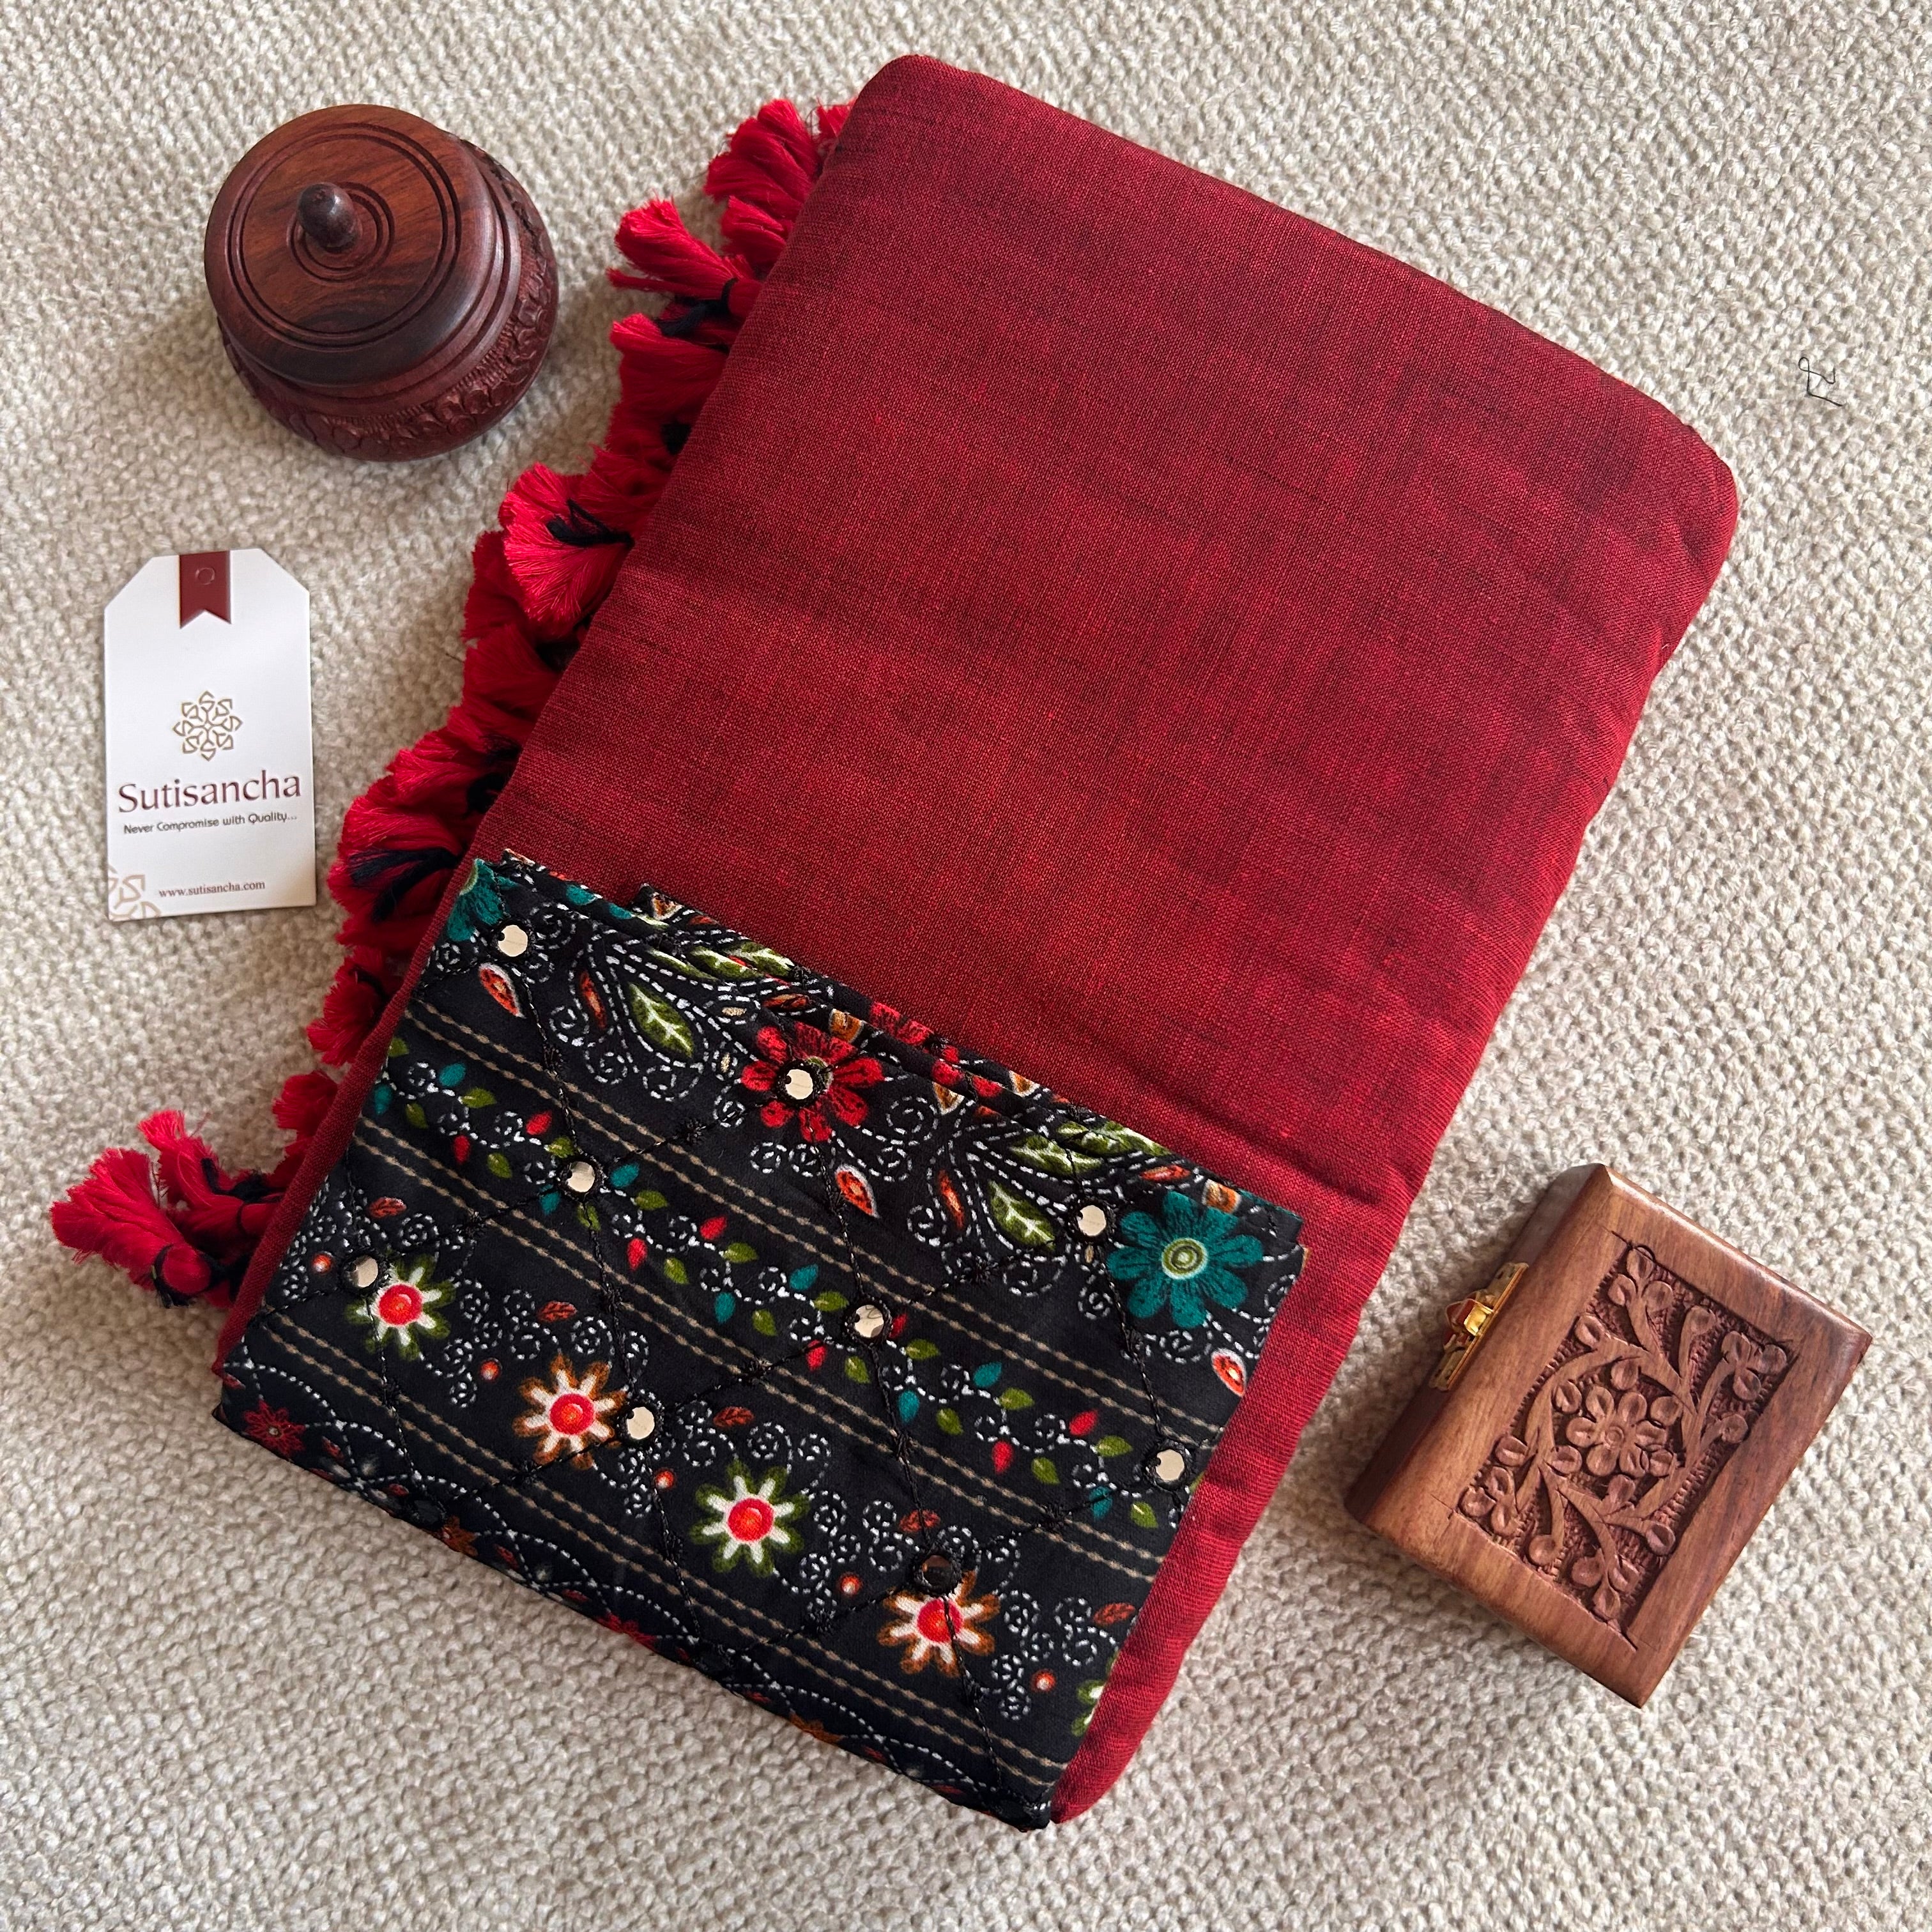 Sutisancha Cherry Red Handloom Cotton Saree with designer Work Blouse